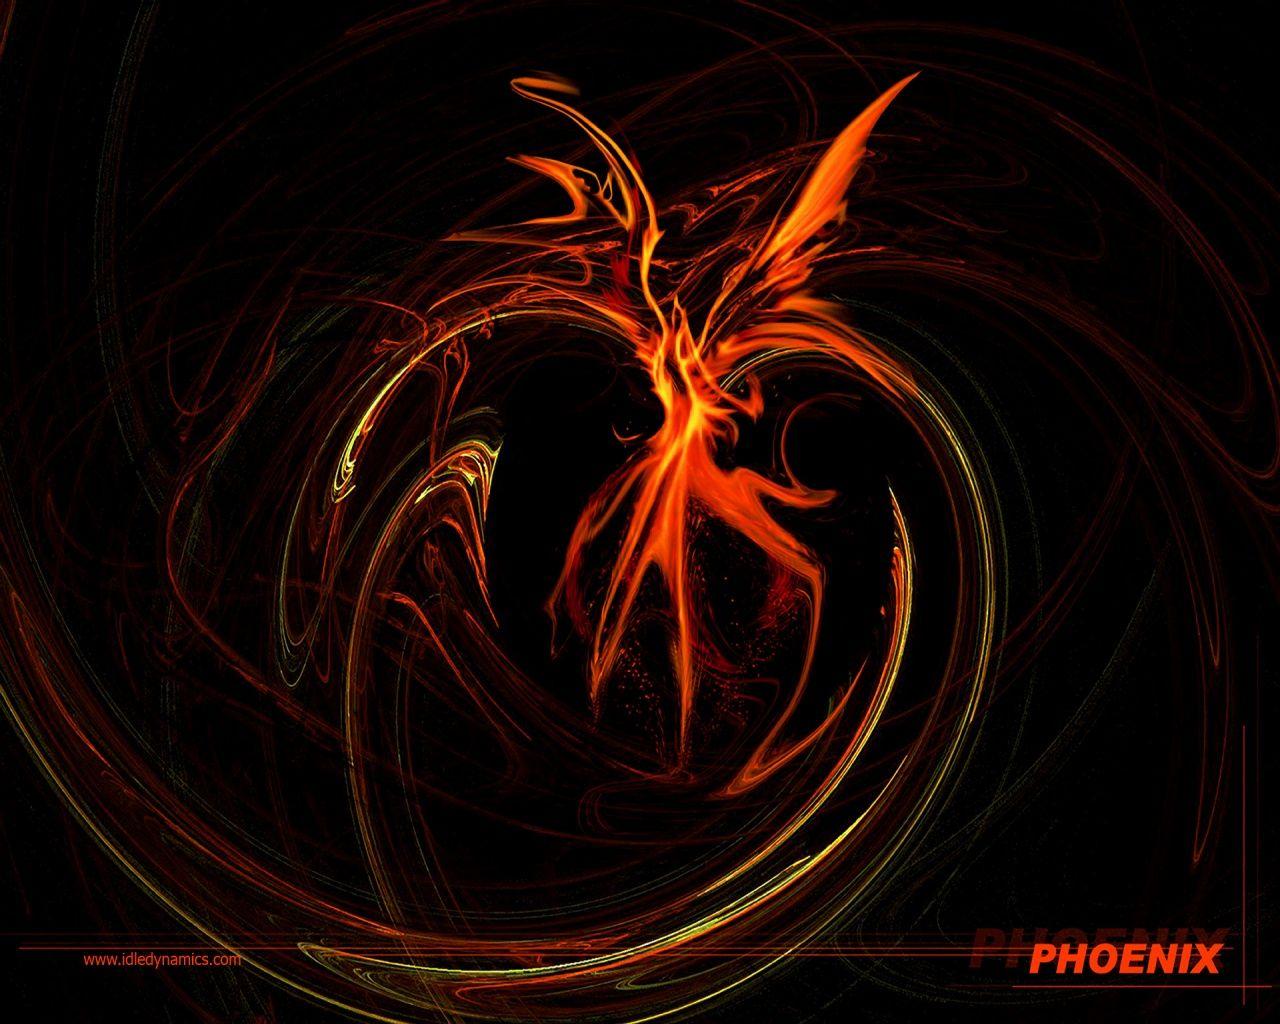 Phoenix desktop PC and Mac wallpaper